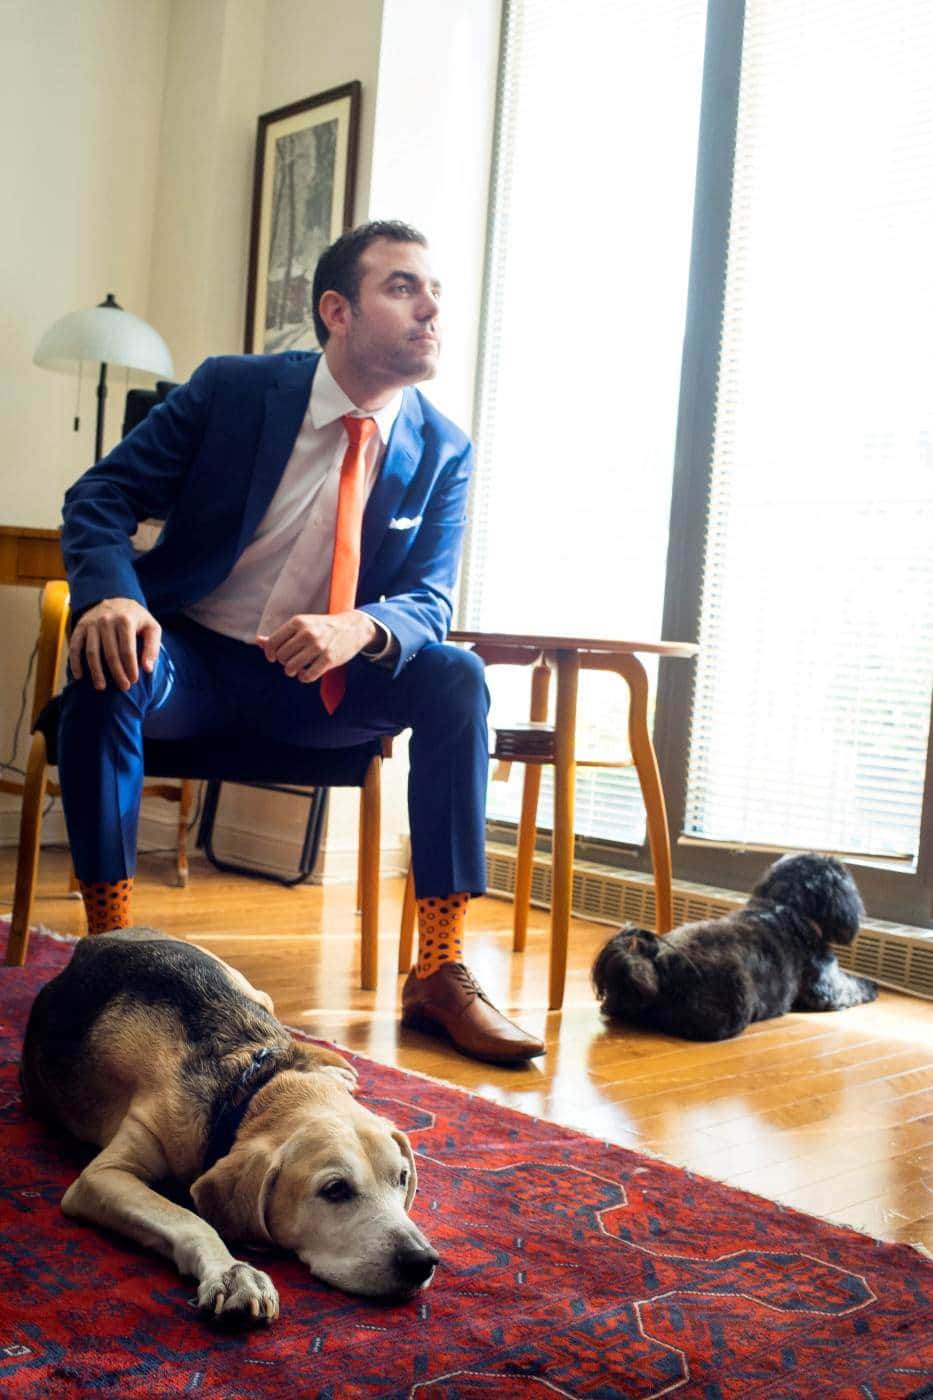 dogs suits amit rhonda jewish groom portrait handsome man orange tie tradition